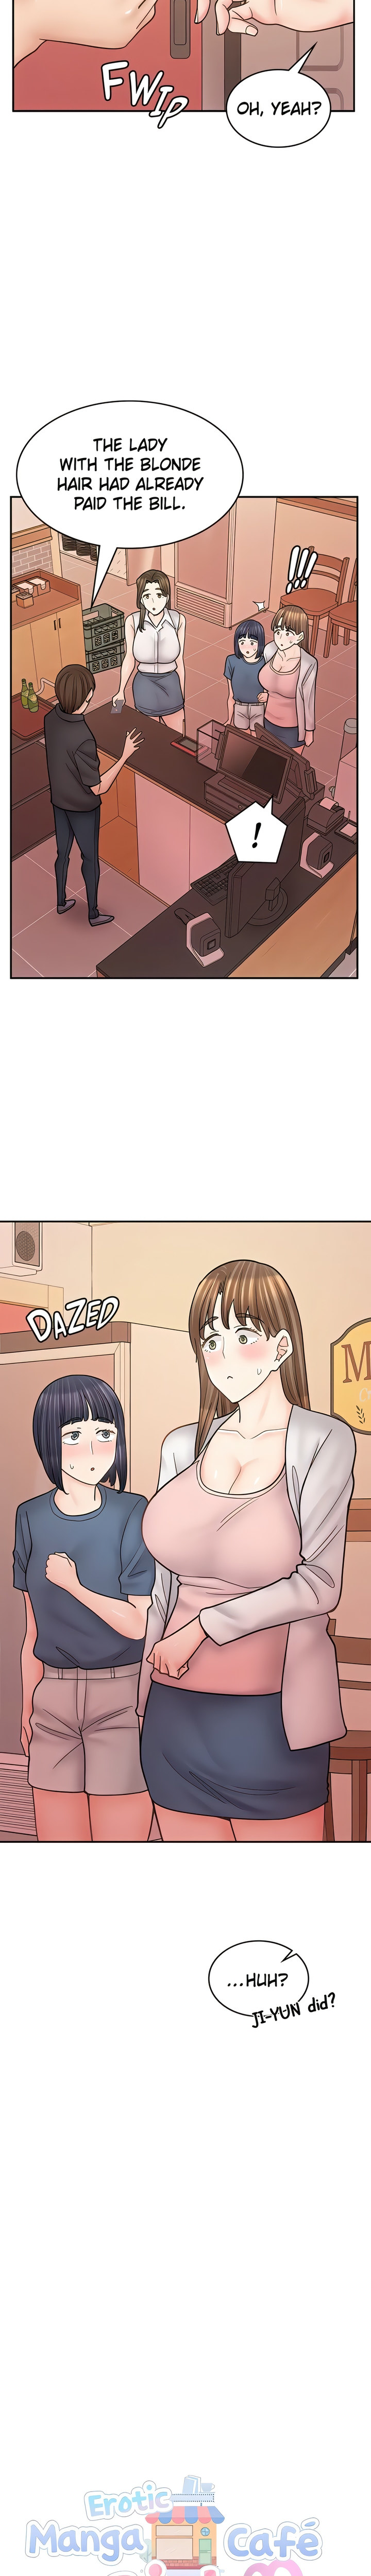 Erotic Manga Café Girls - Chapter 49 Page 3